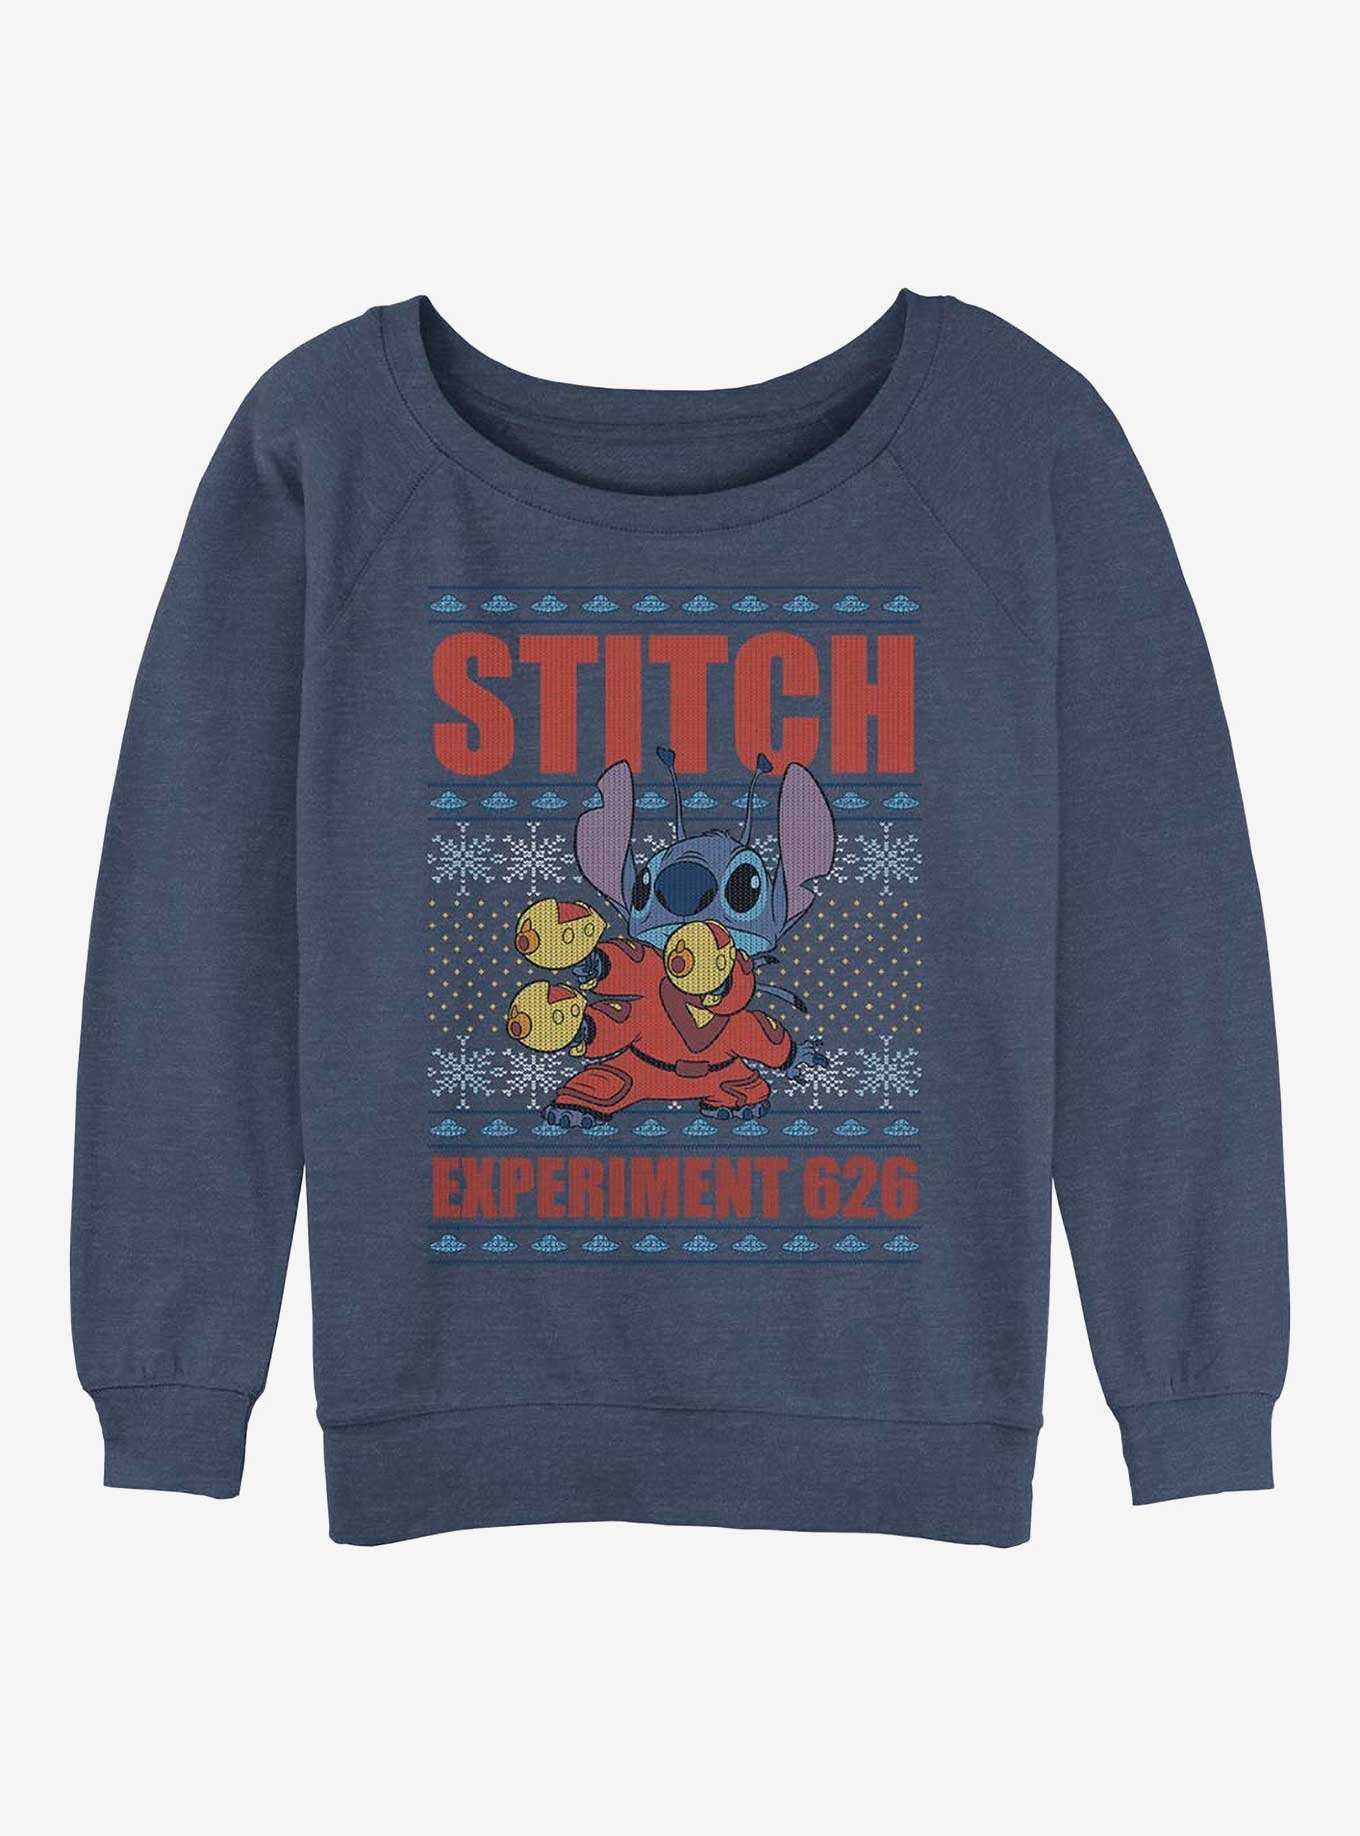 Disney Lilo & Stitch Experiment 626 Ugly Christmas Girls Slouchy Sweatshirt, , hi-res